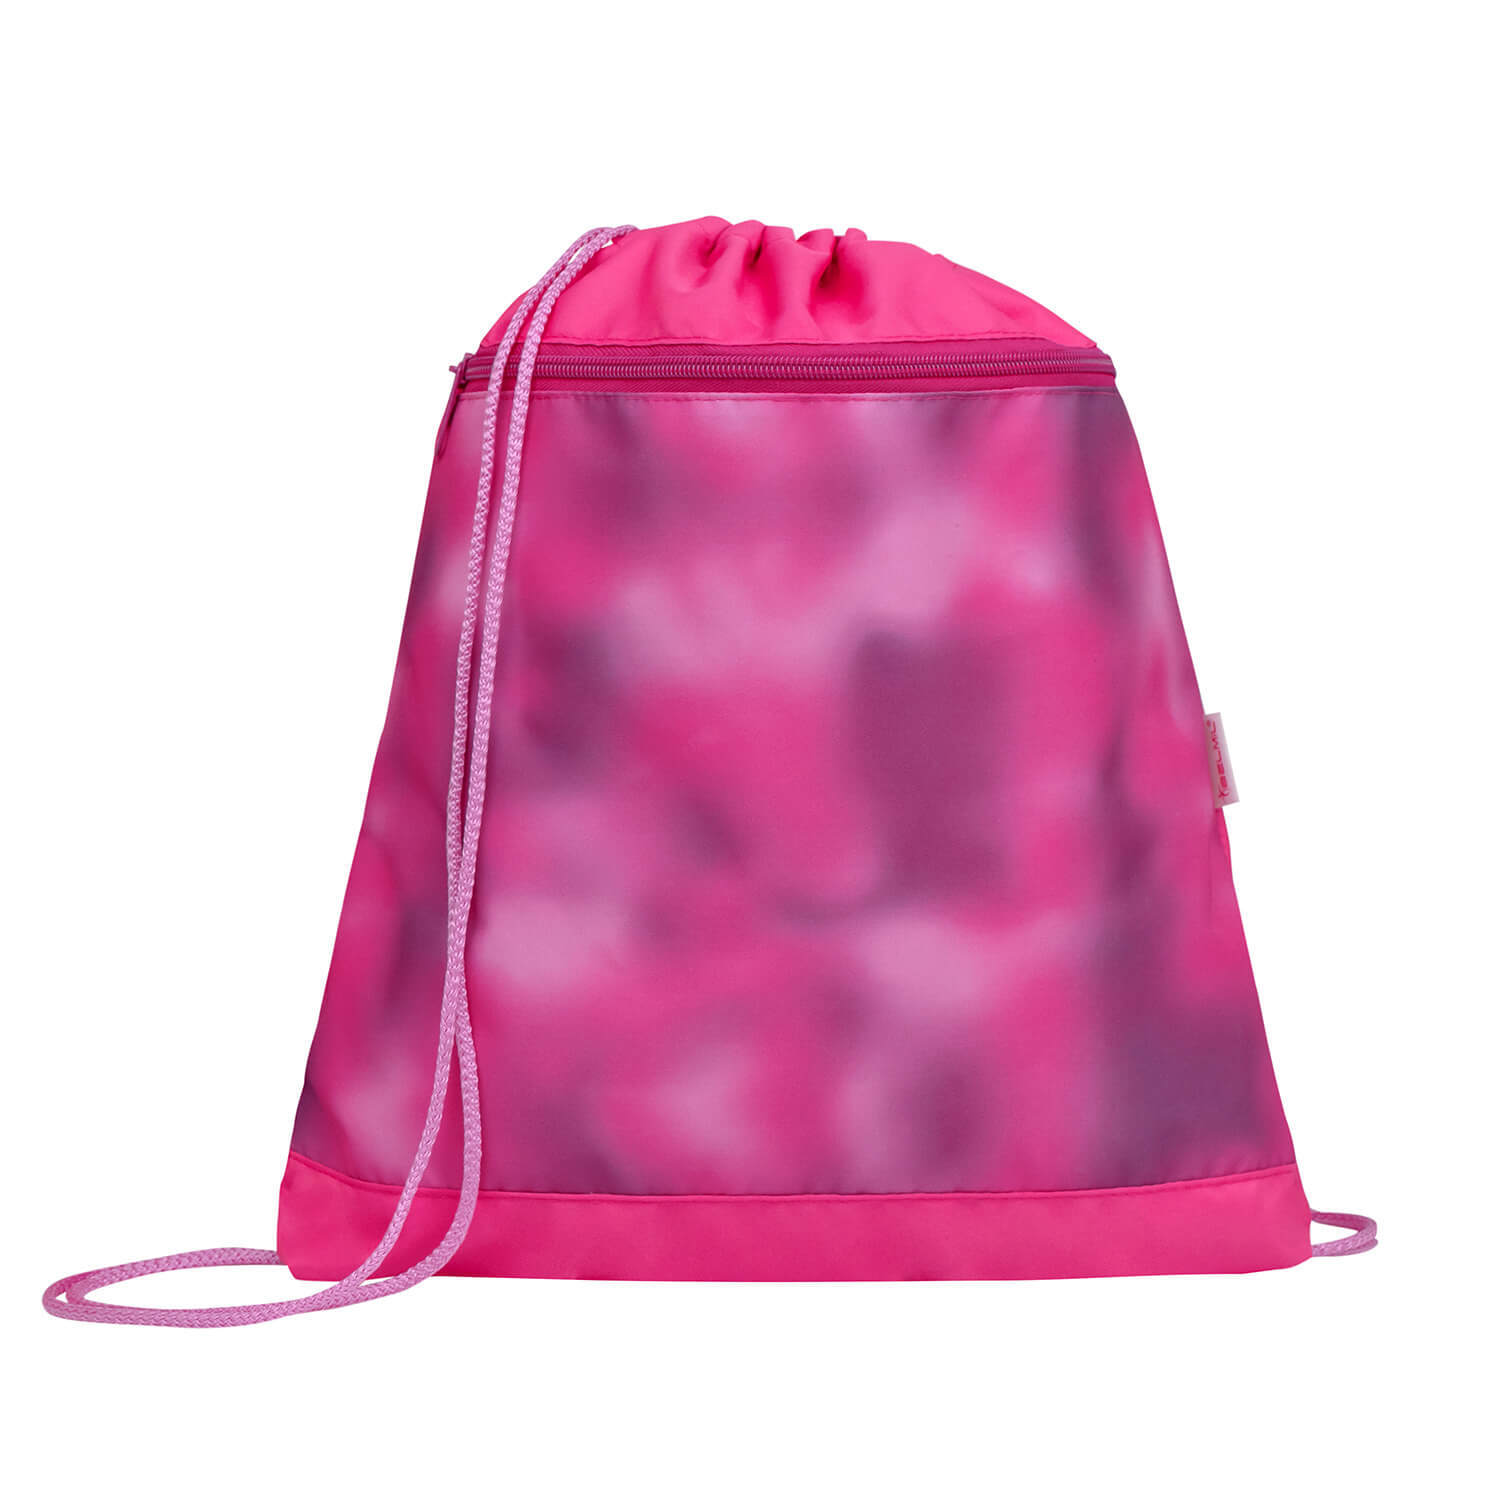 Classy Shiny Pink schoolbag set 5 pcs